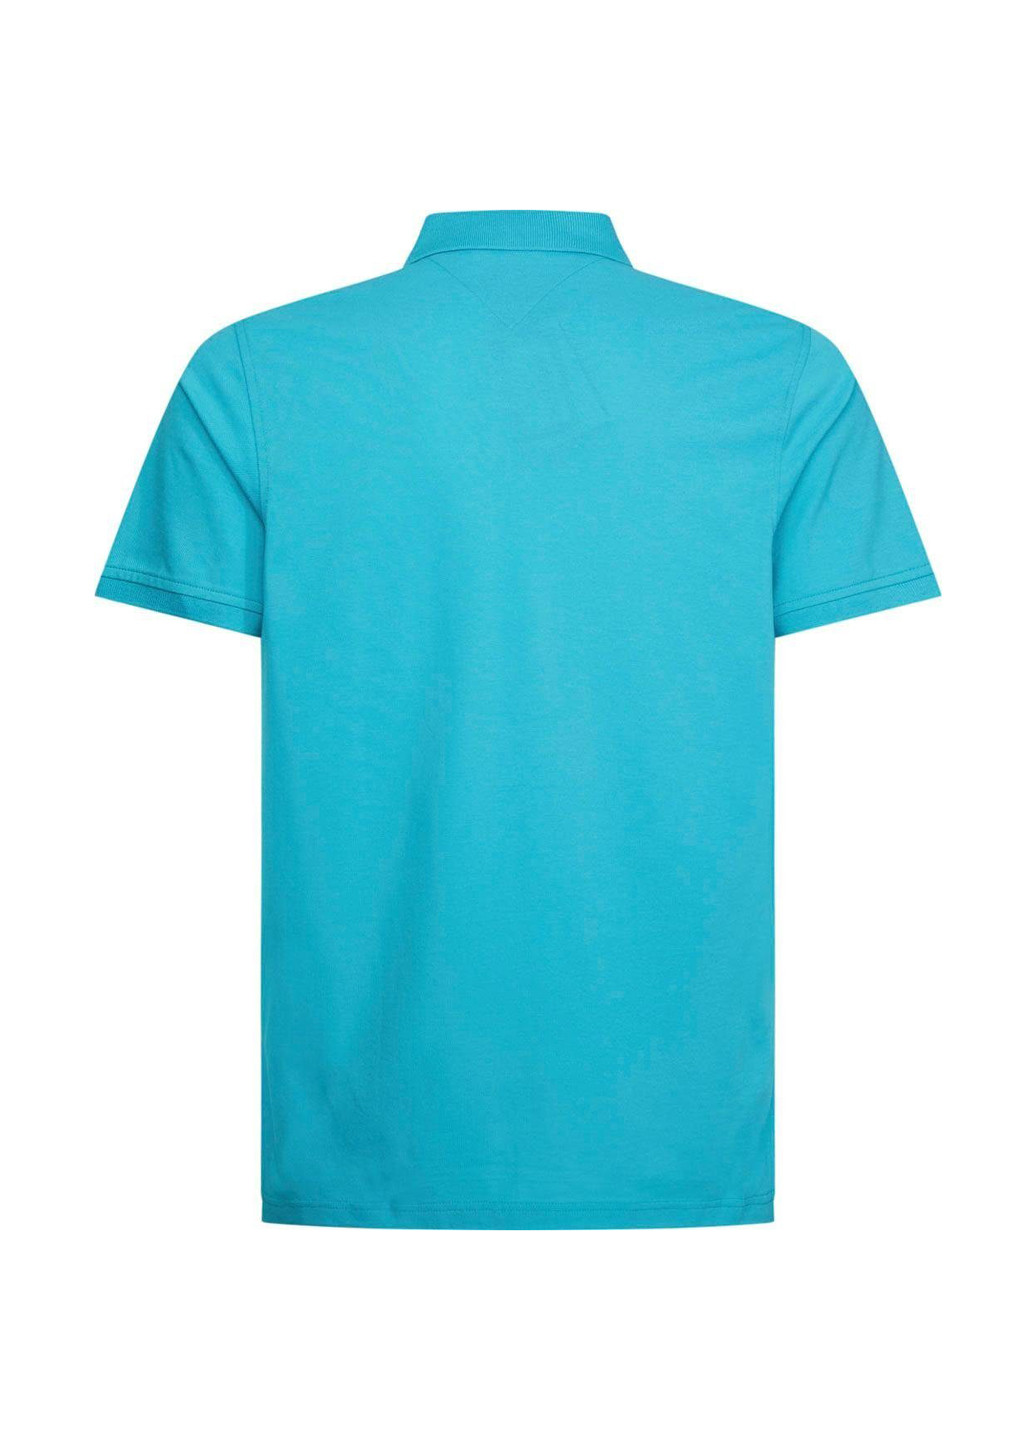 Голубой футболка-поло для мужчин Tommy Hilfiger с логотипом